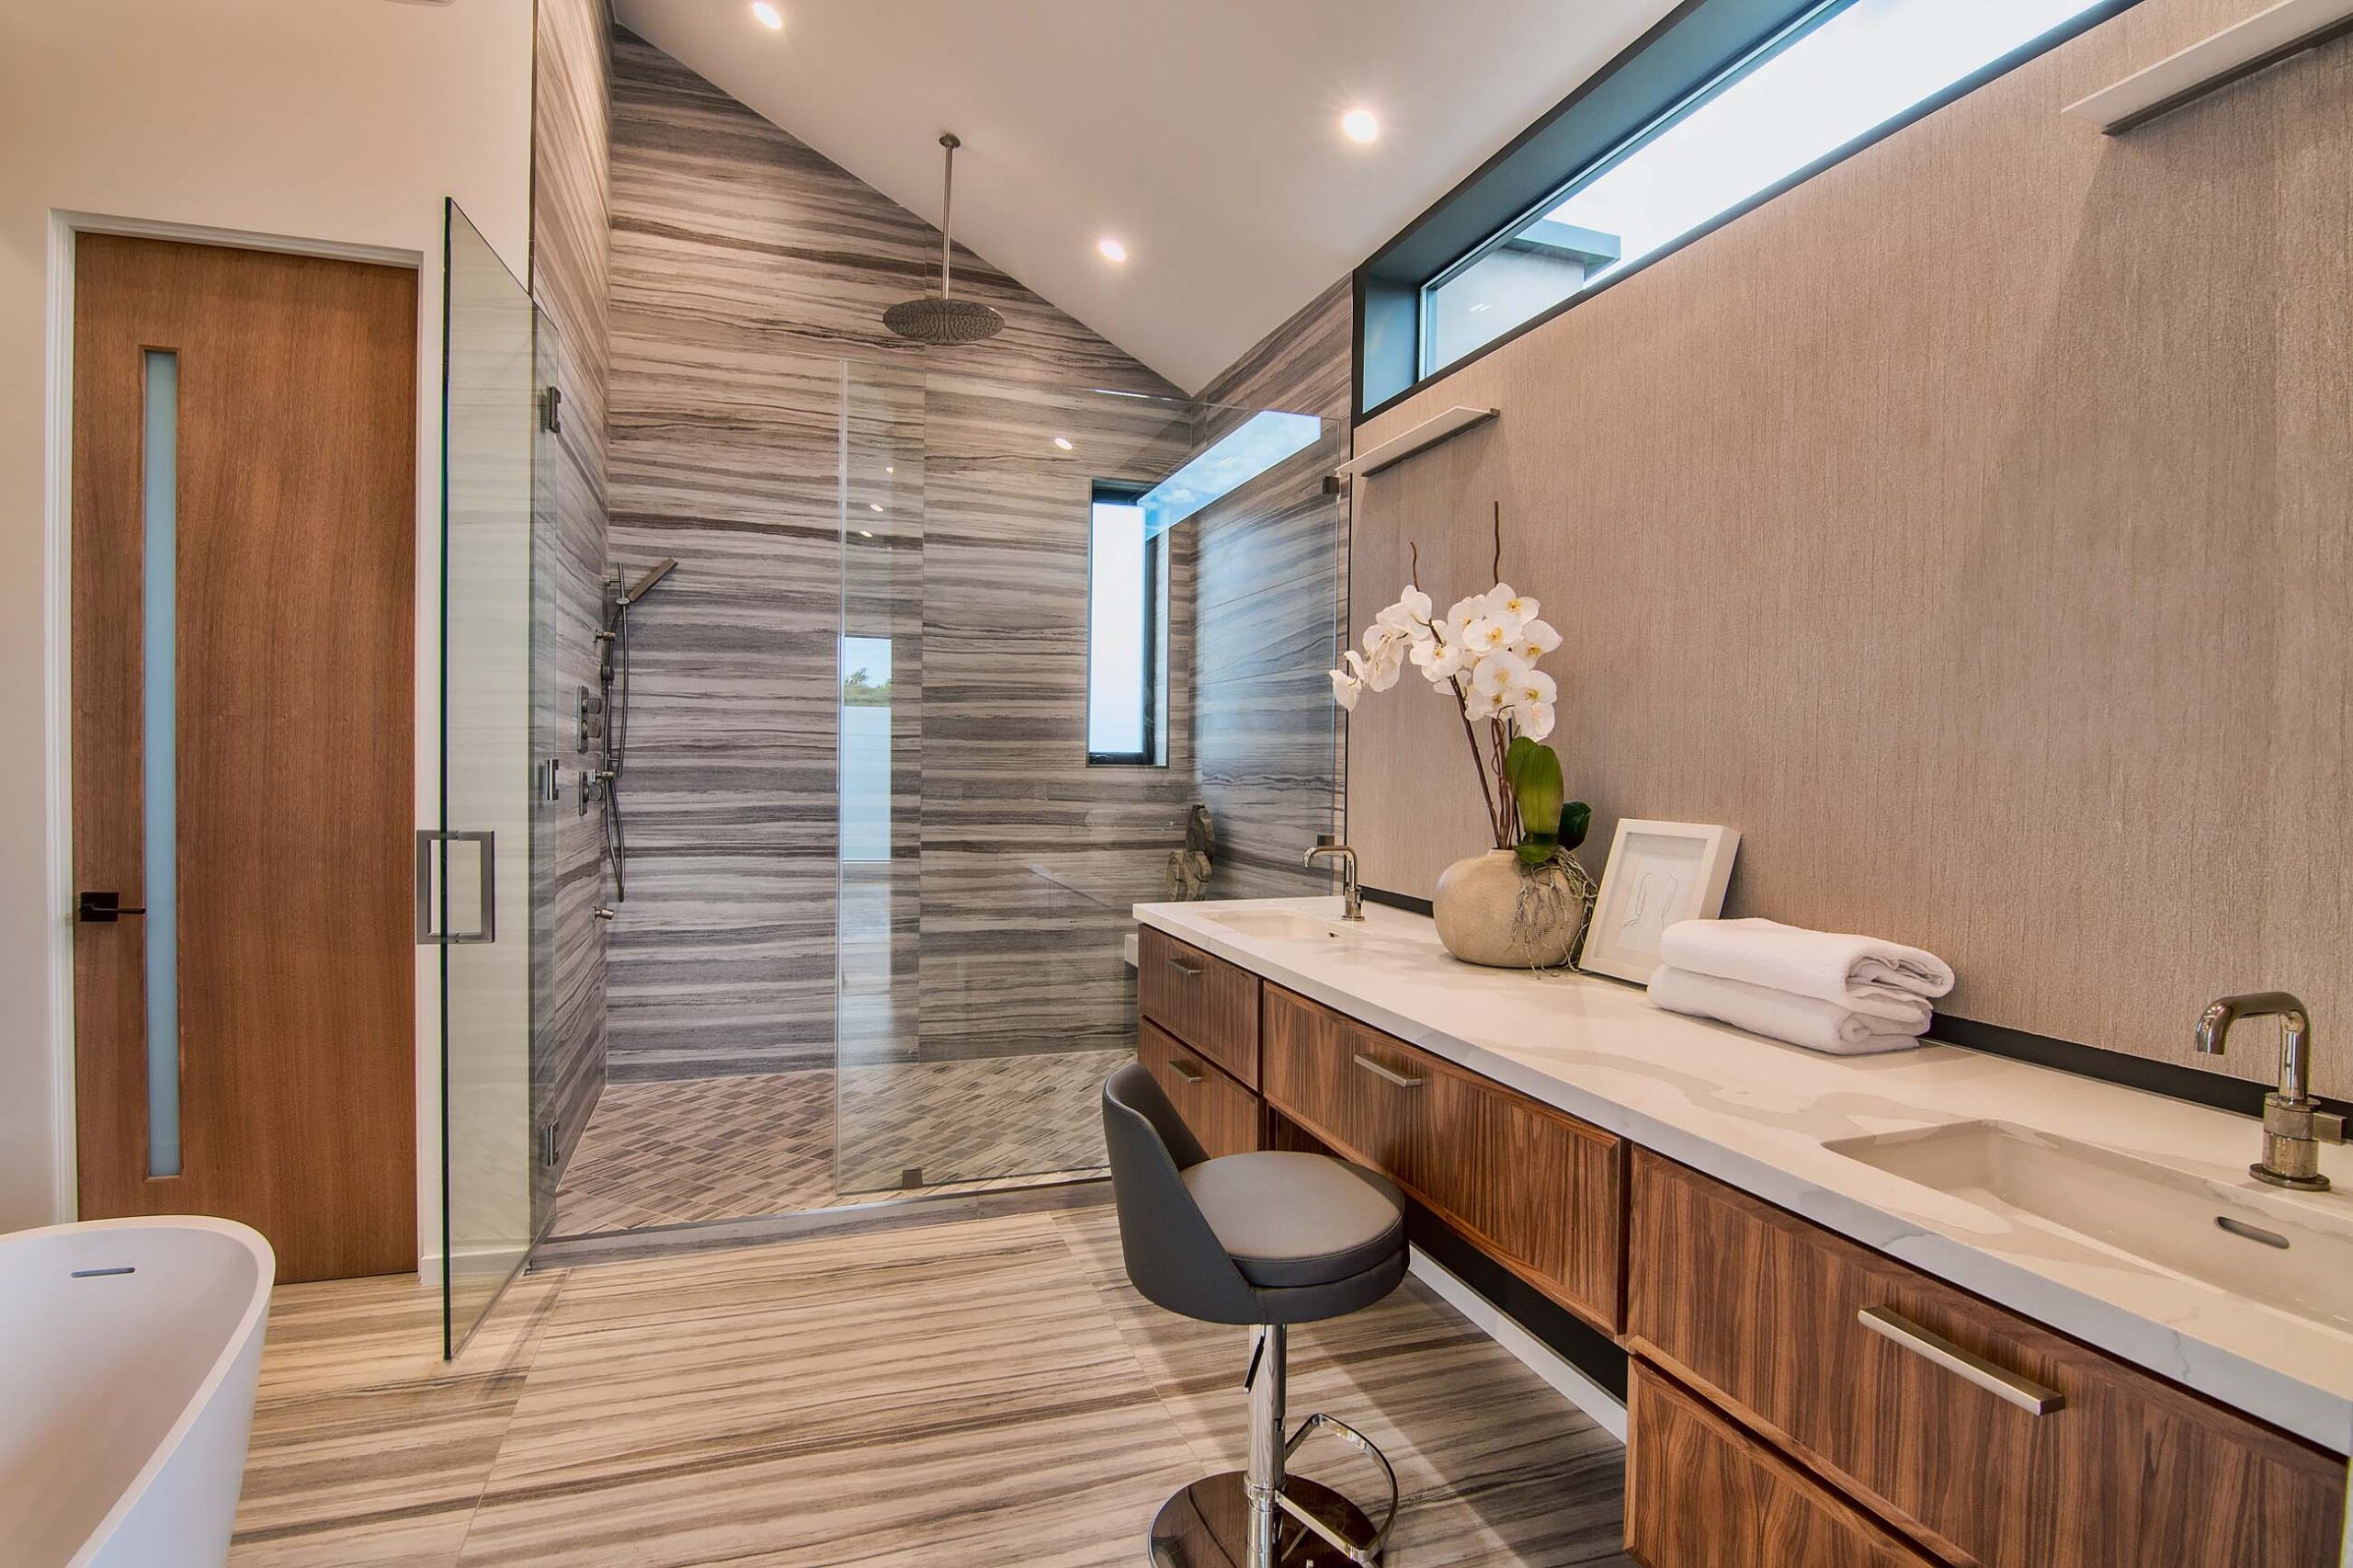 Gorgeous bathroom design featured in modern California home